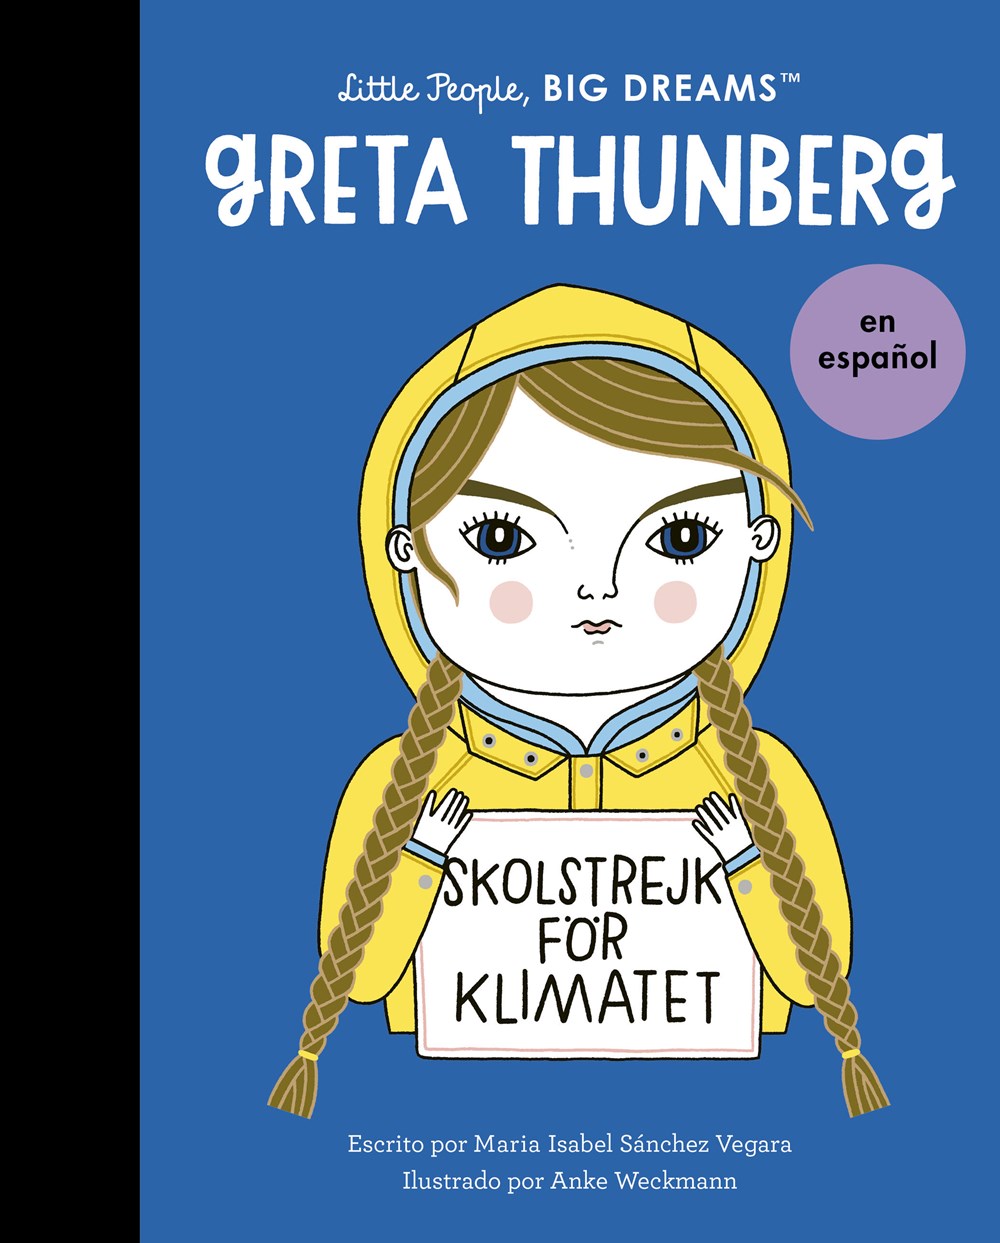 Little People, Big Dreams en Español: Greta Thunberg (Pasta Blanda / Paperback)